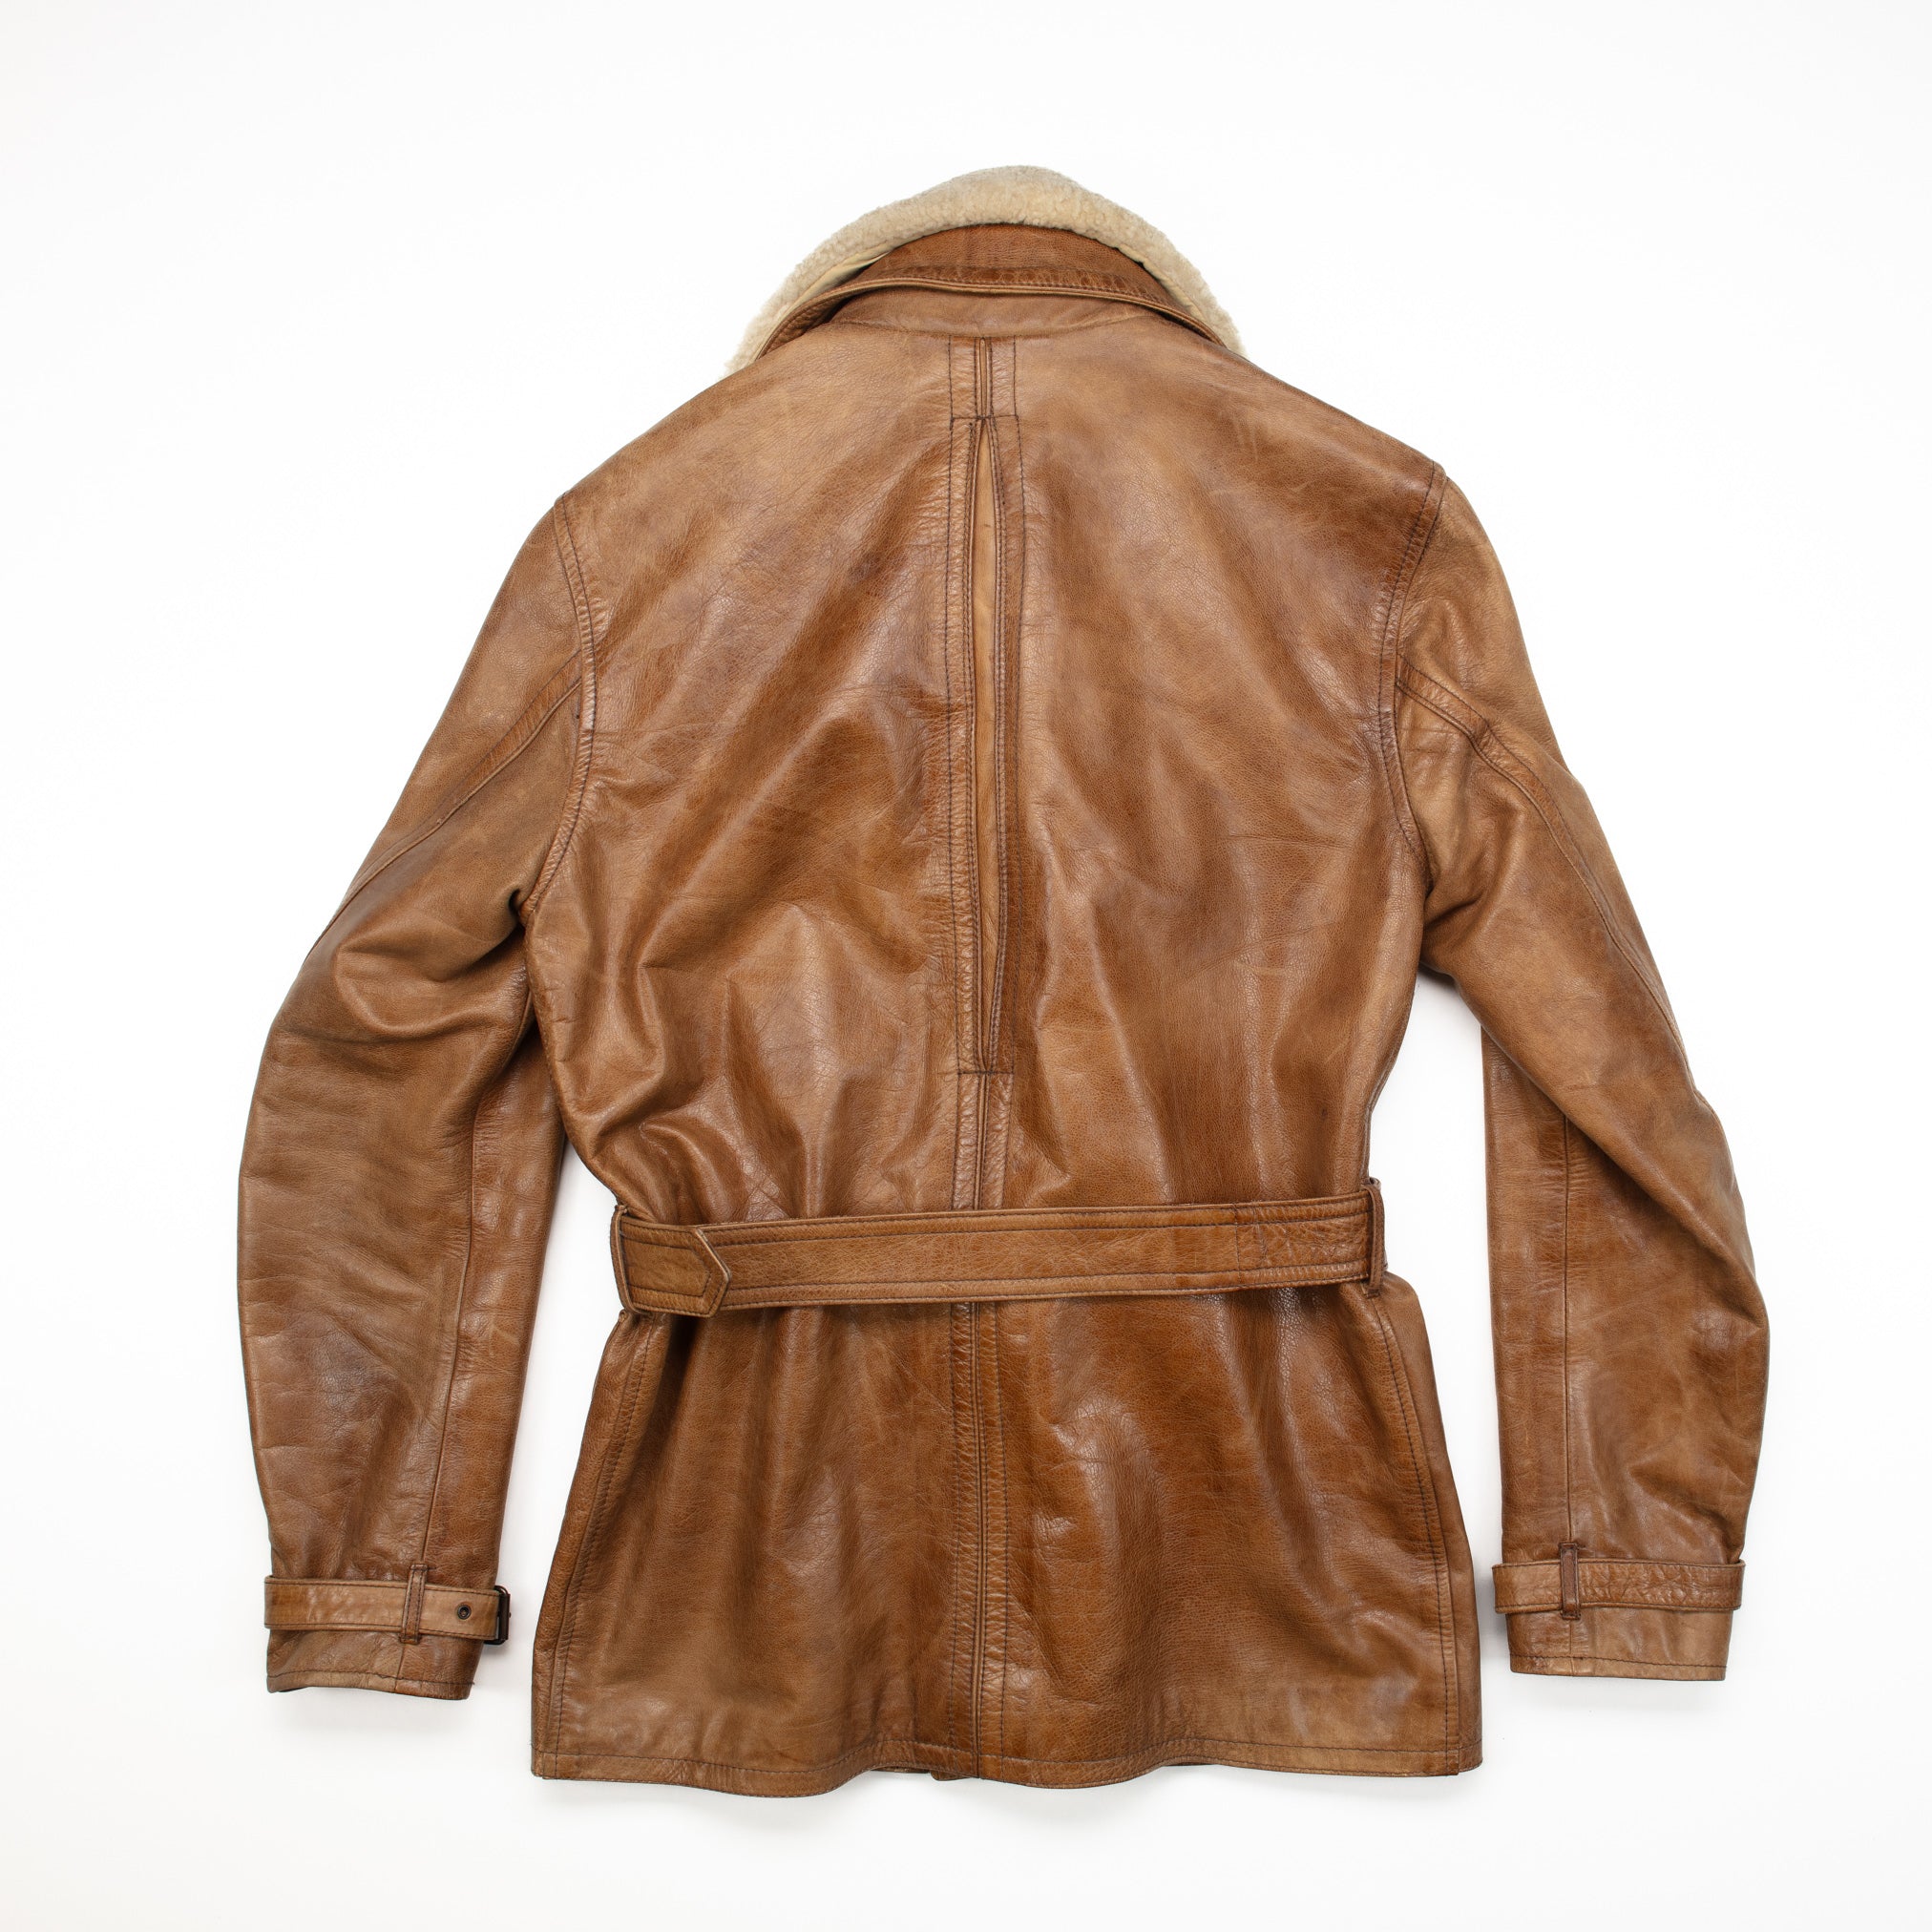 Aviator Jacket in Tan Leather - M